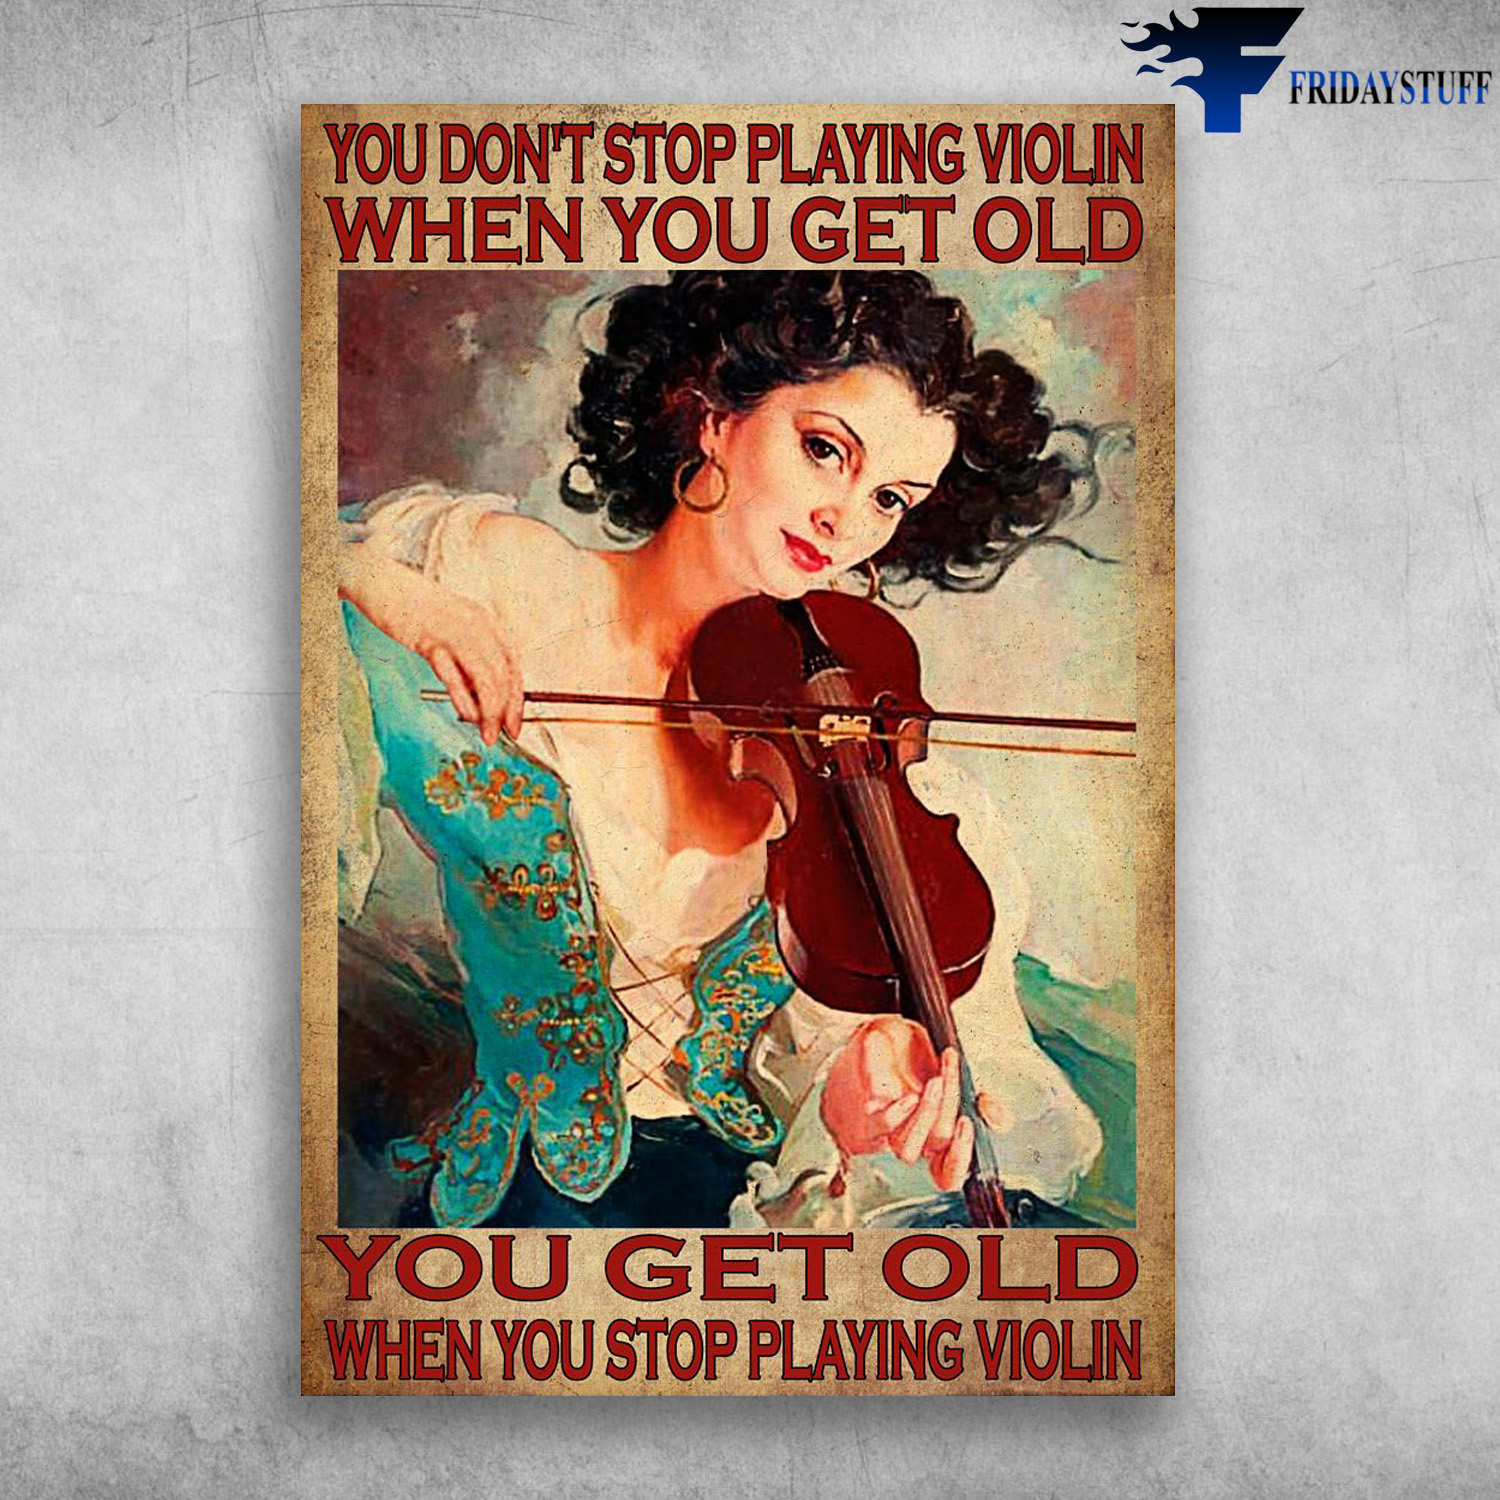 Beautiful Girl Playing Violin - You Don't Stop Playing When You Get Old, You Get Old When You Stop Playing Violin